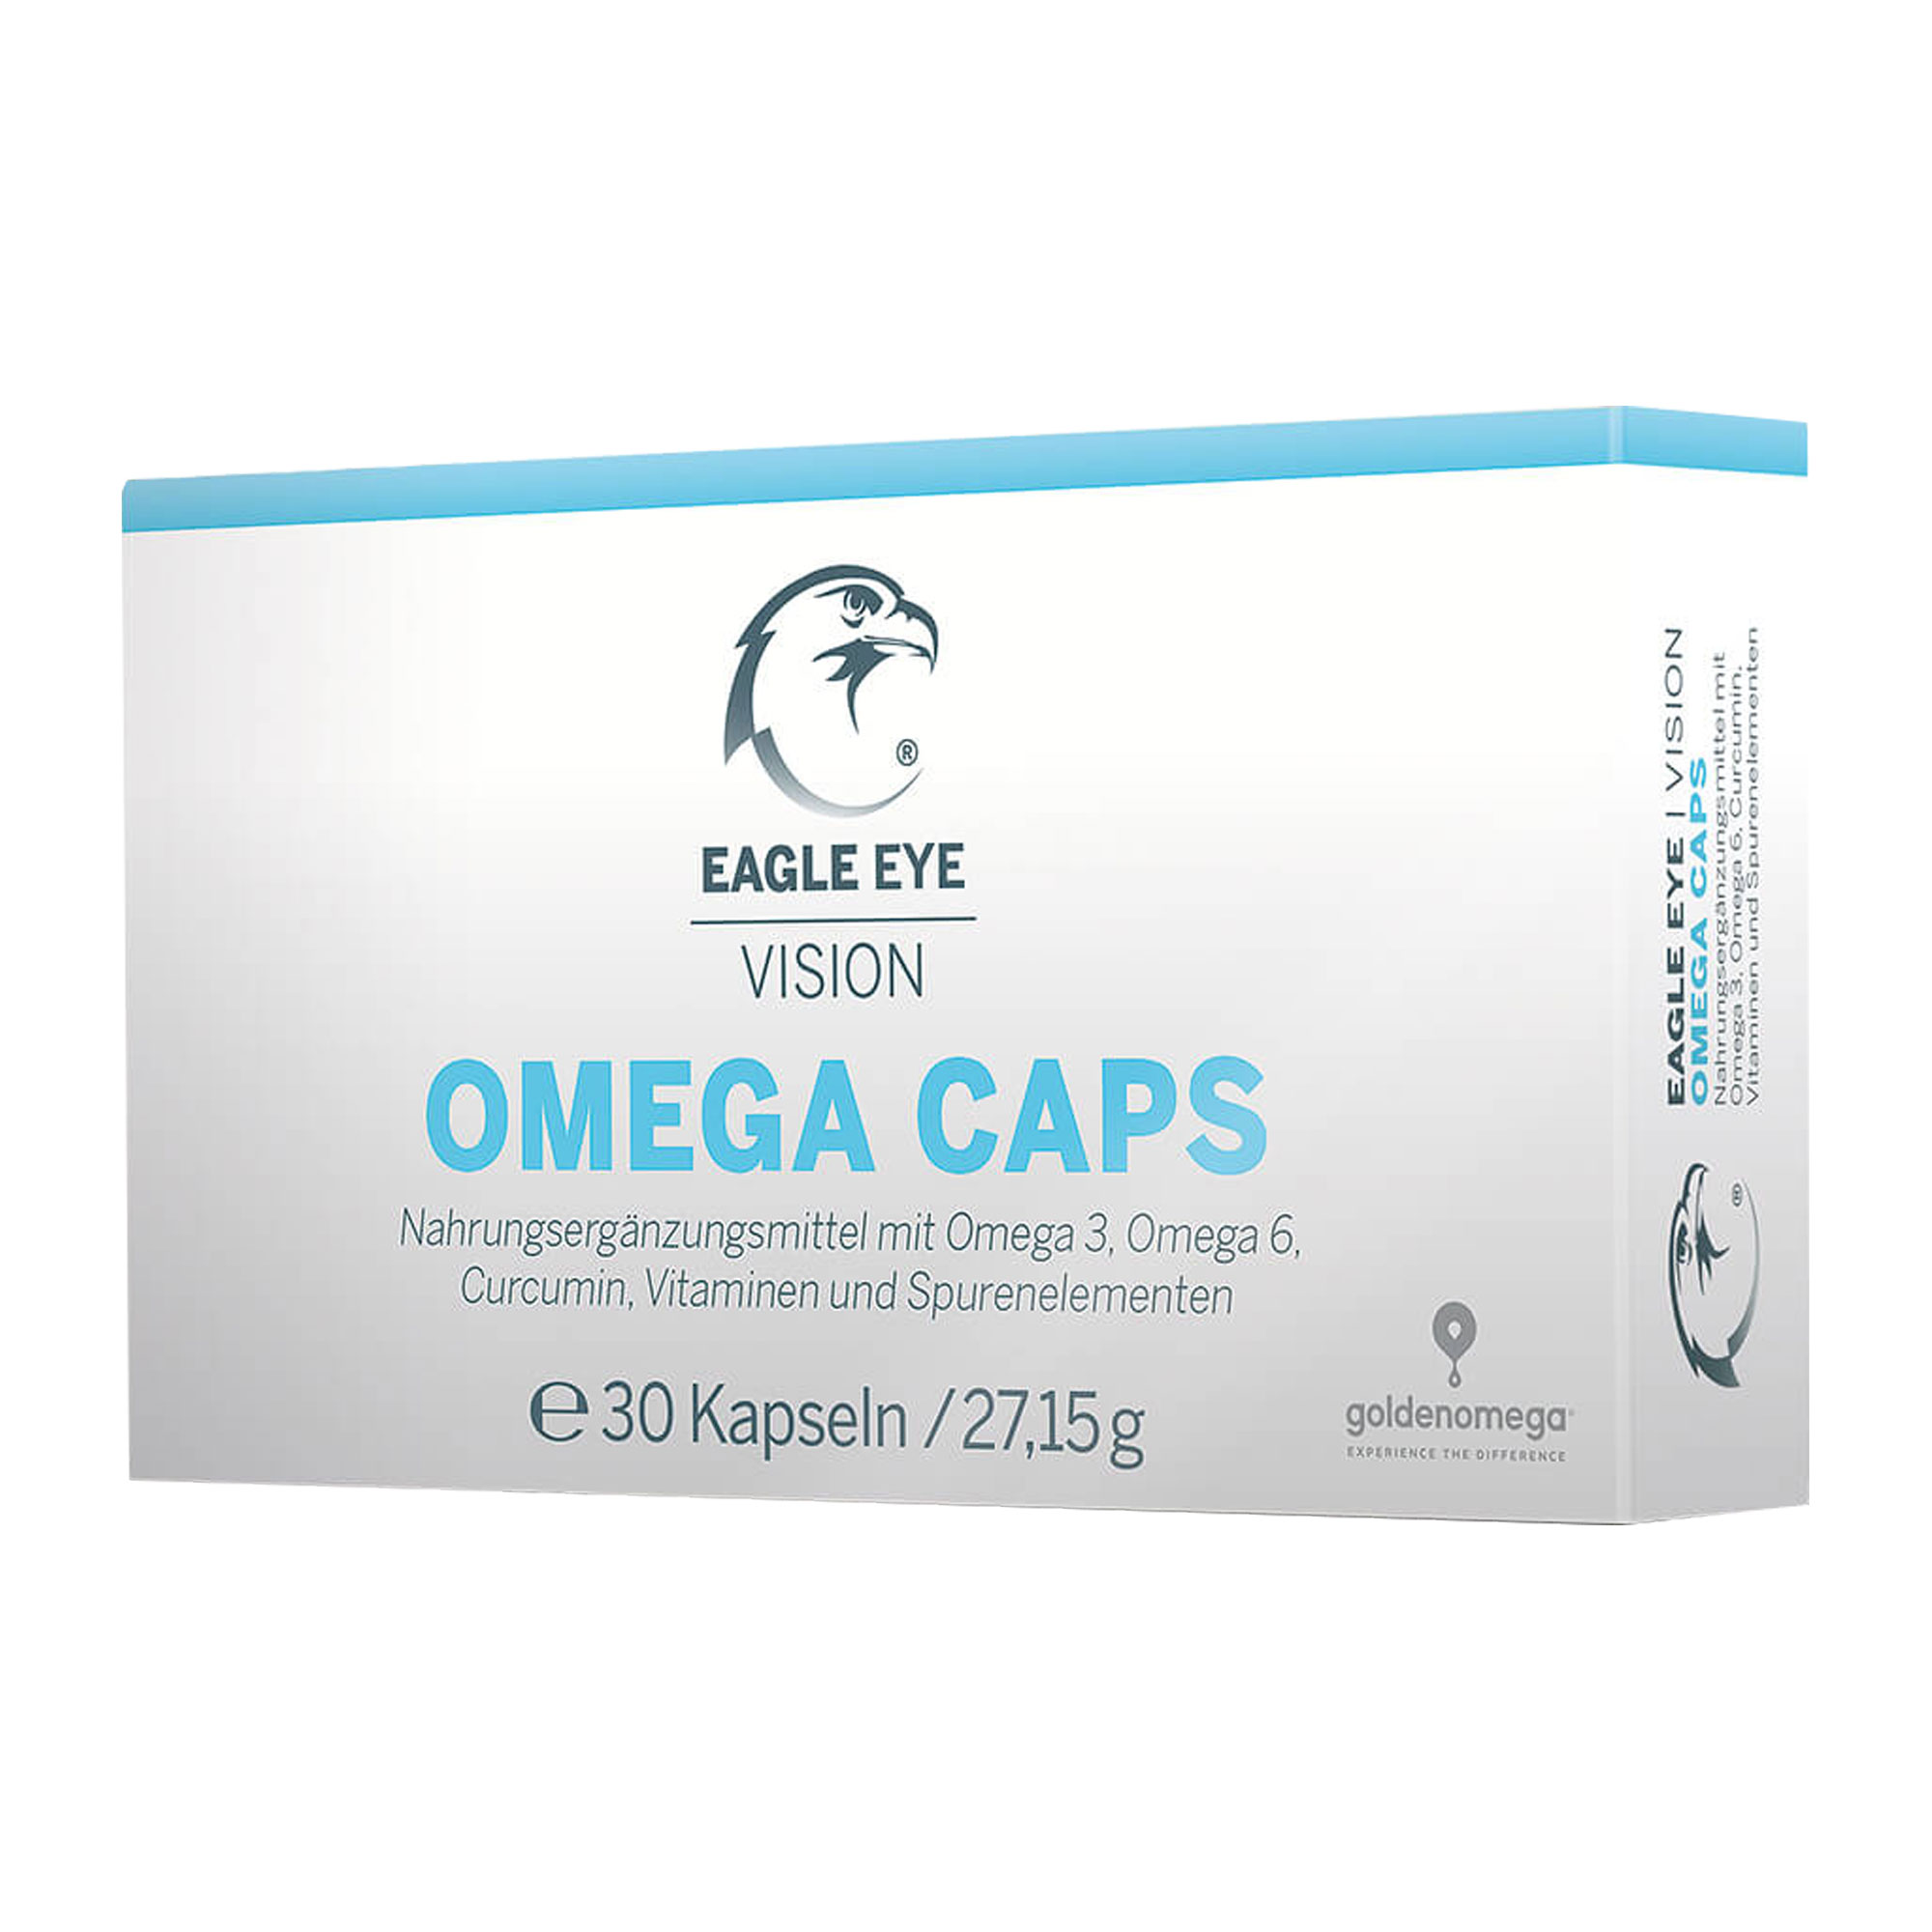 Nahrungsergänzungsmittel mit Omega 3, Omega 6, Curcumin, Vitaminen und Spurenelementen.